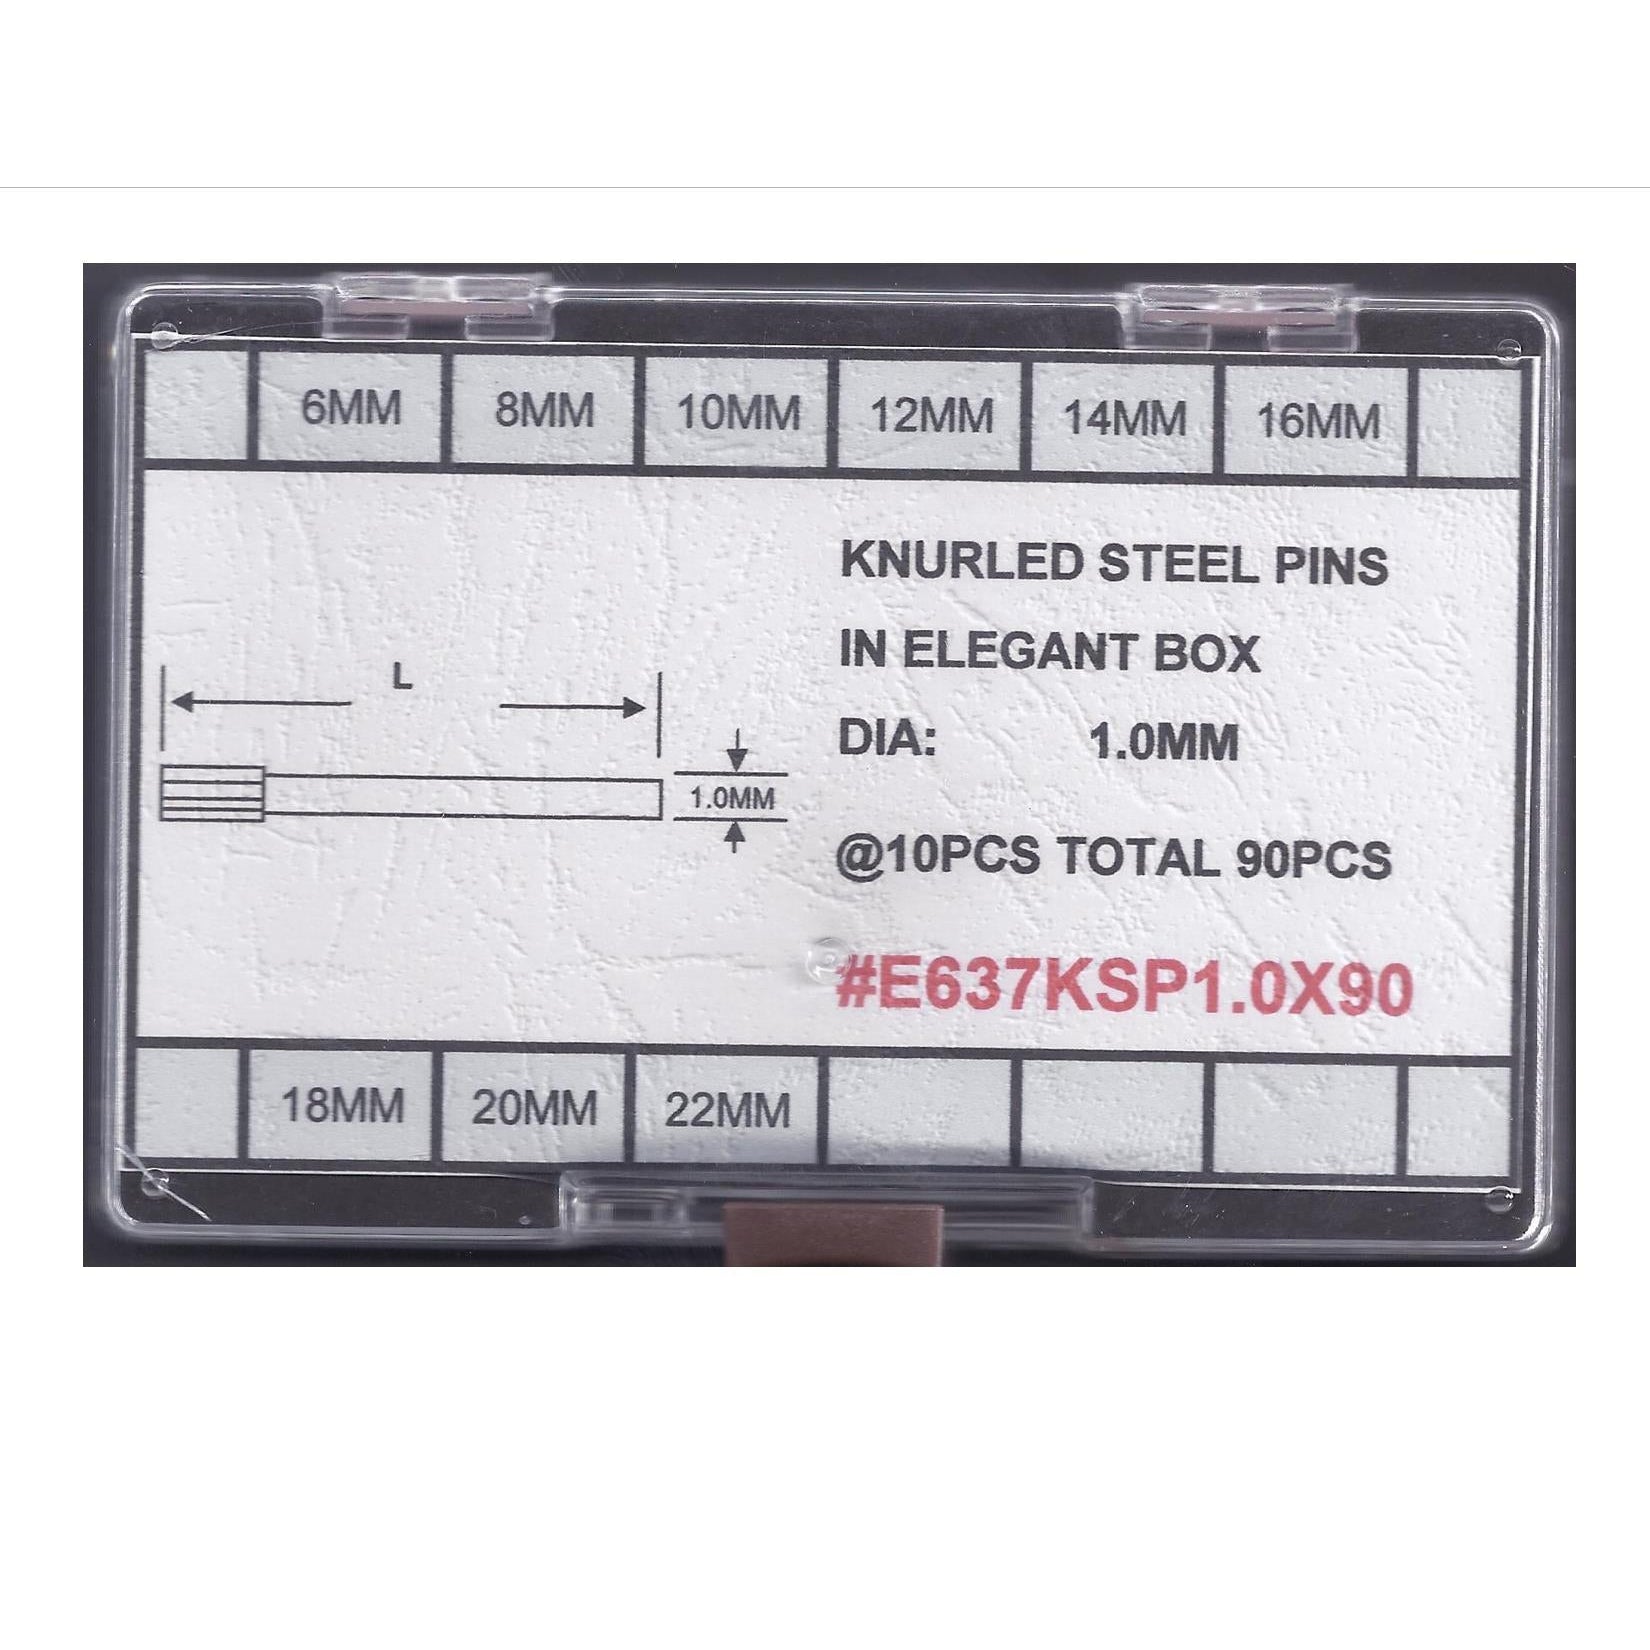 KNURLED PINS KIT #637KSP1.0